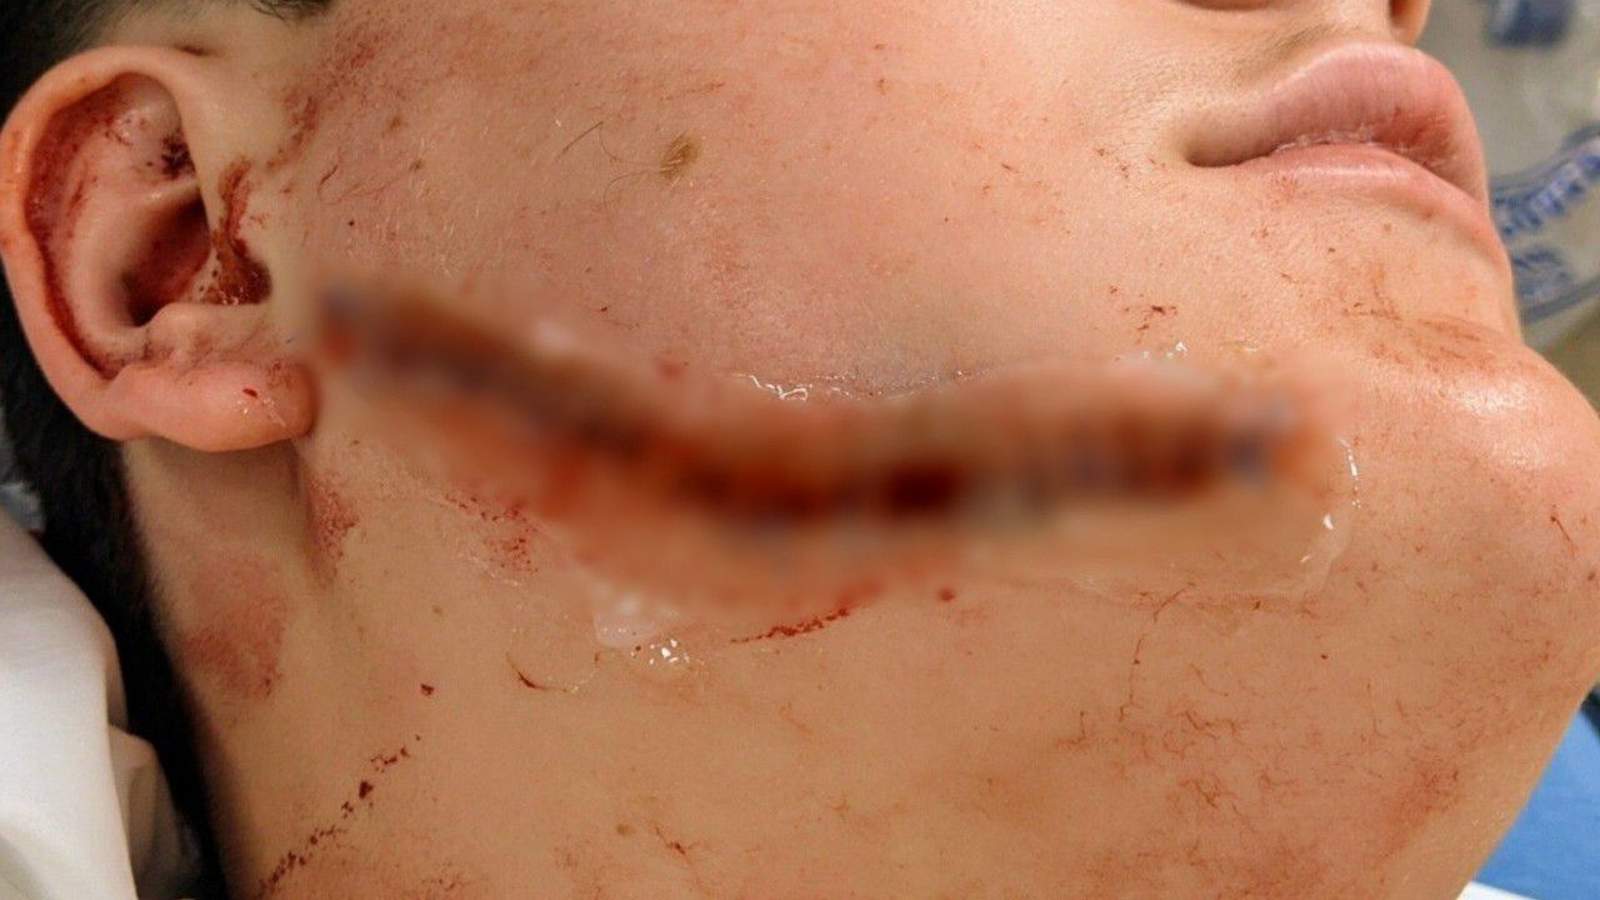 Teen’s face slashed in apparent random attack in Orange City